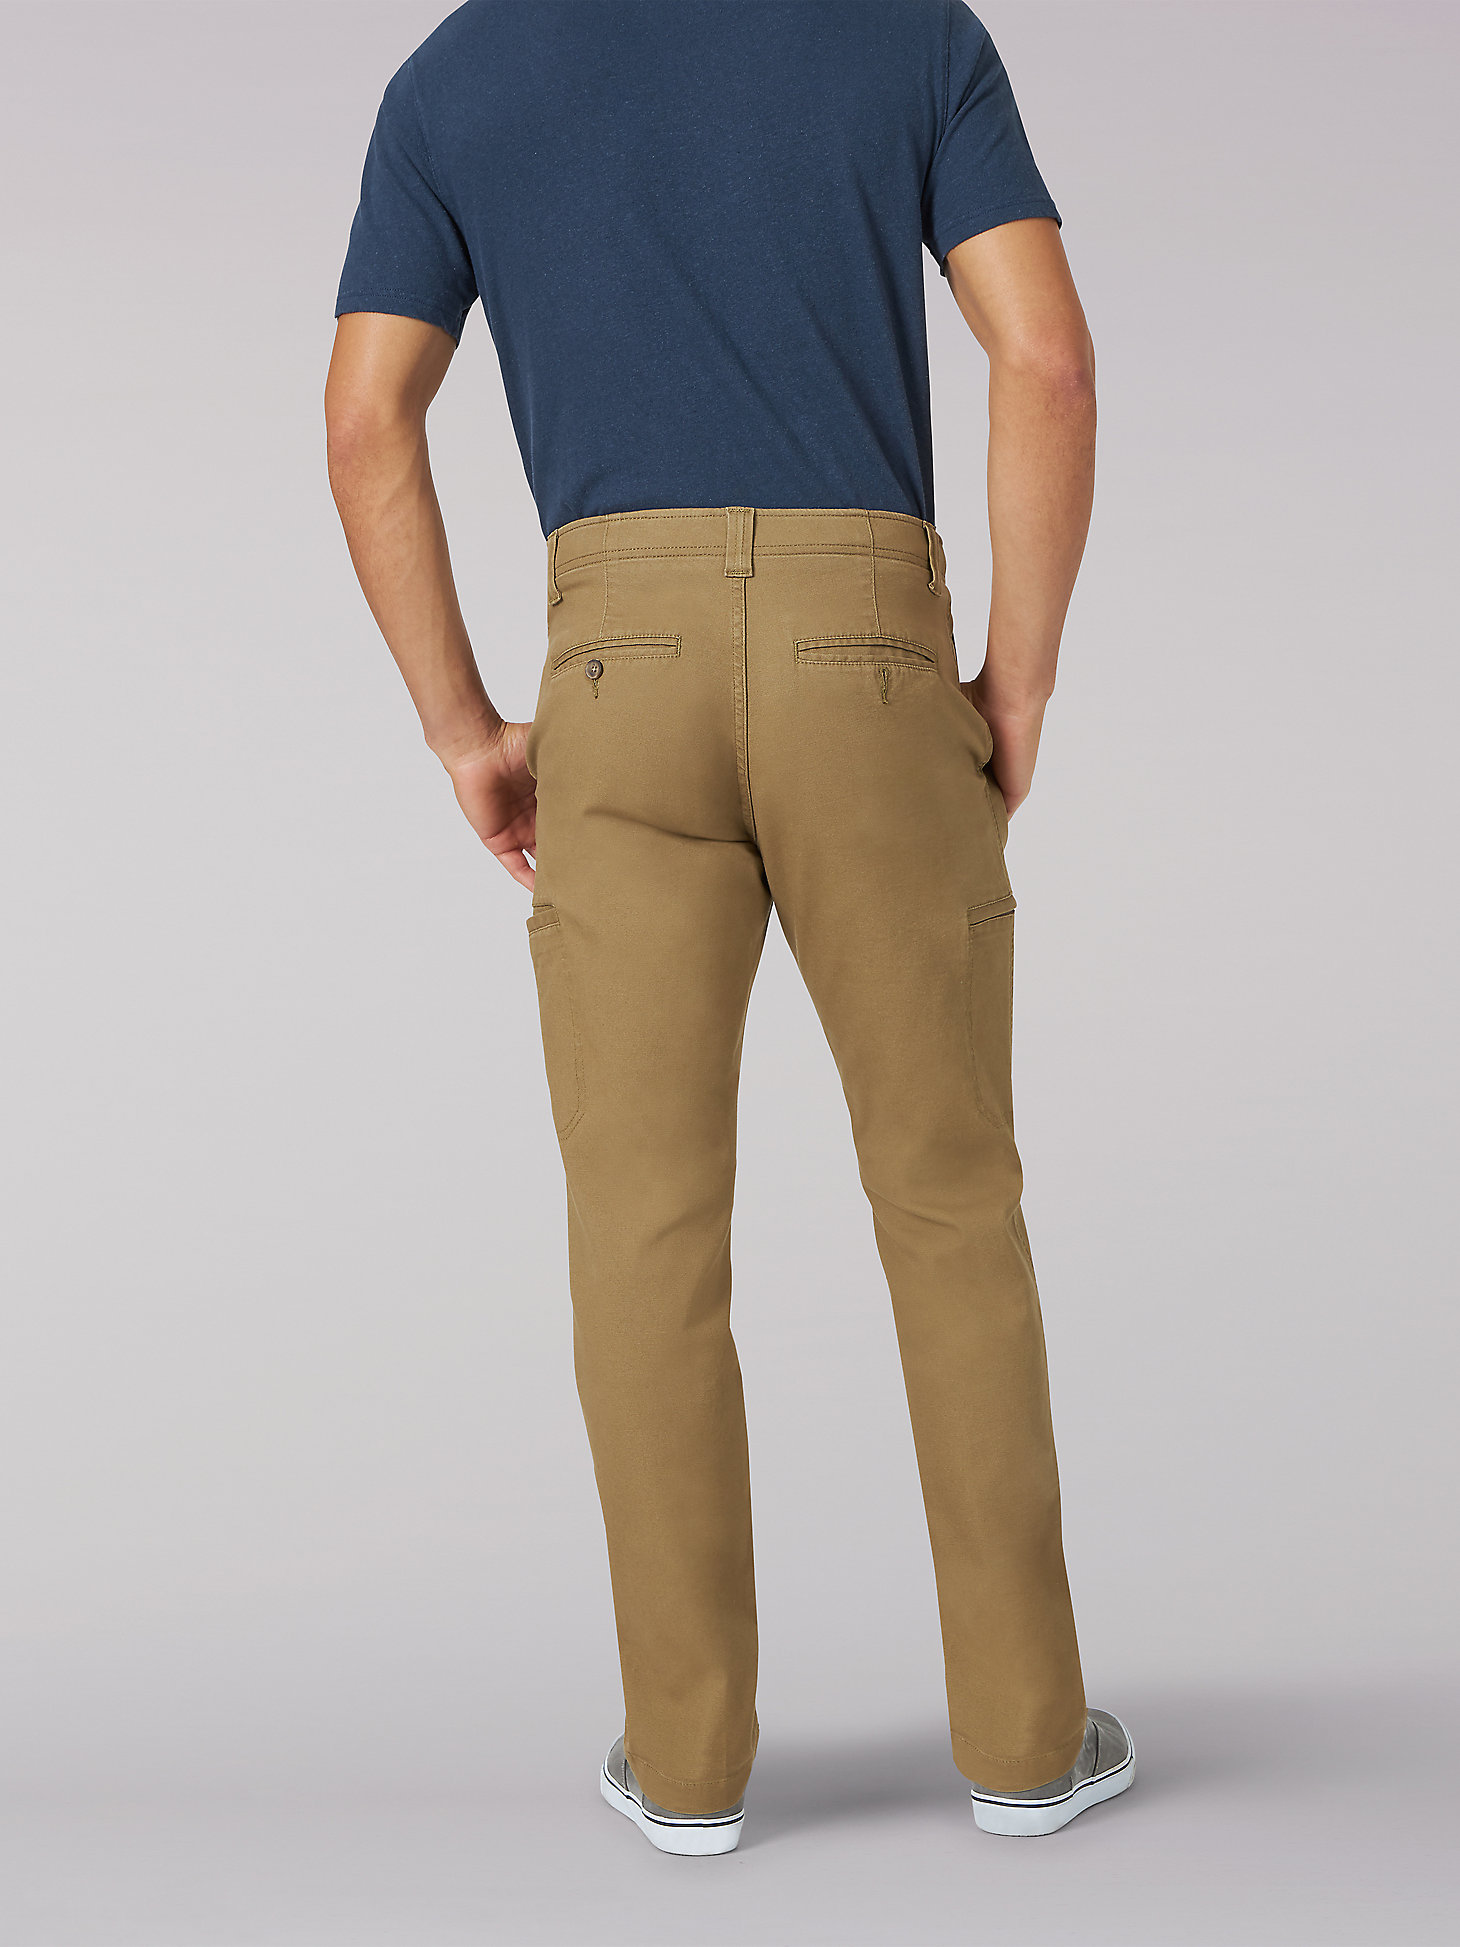 Men’s Extreme Comfort Slim Fit Cargo Pant in Bronze alternative view 2